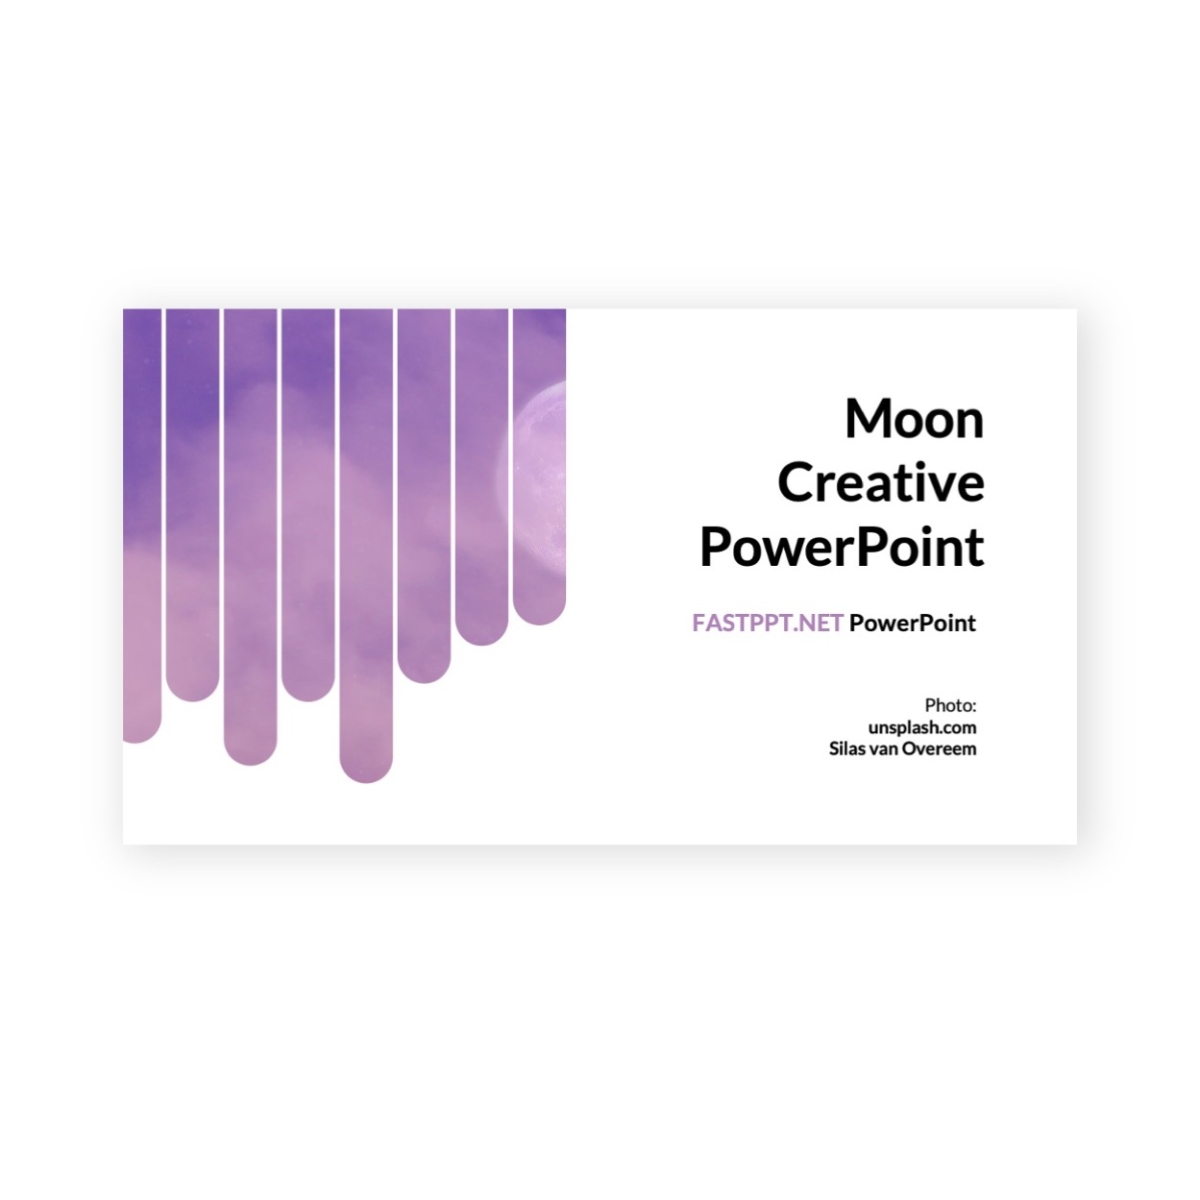 Moon Creative PowerPoint Showcase